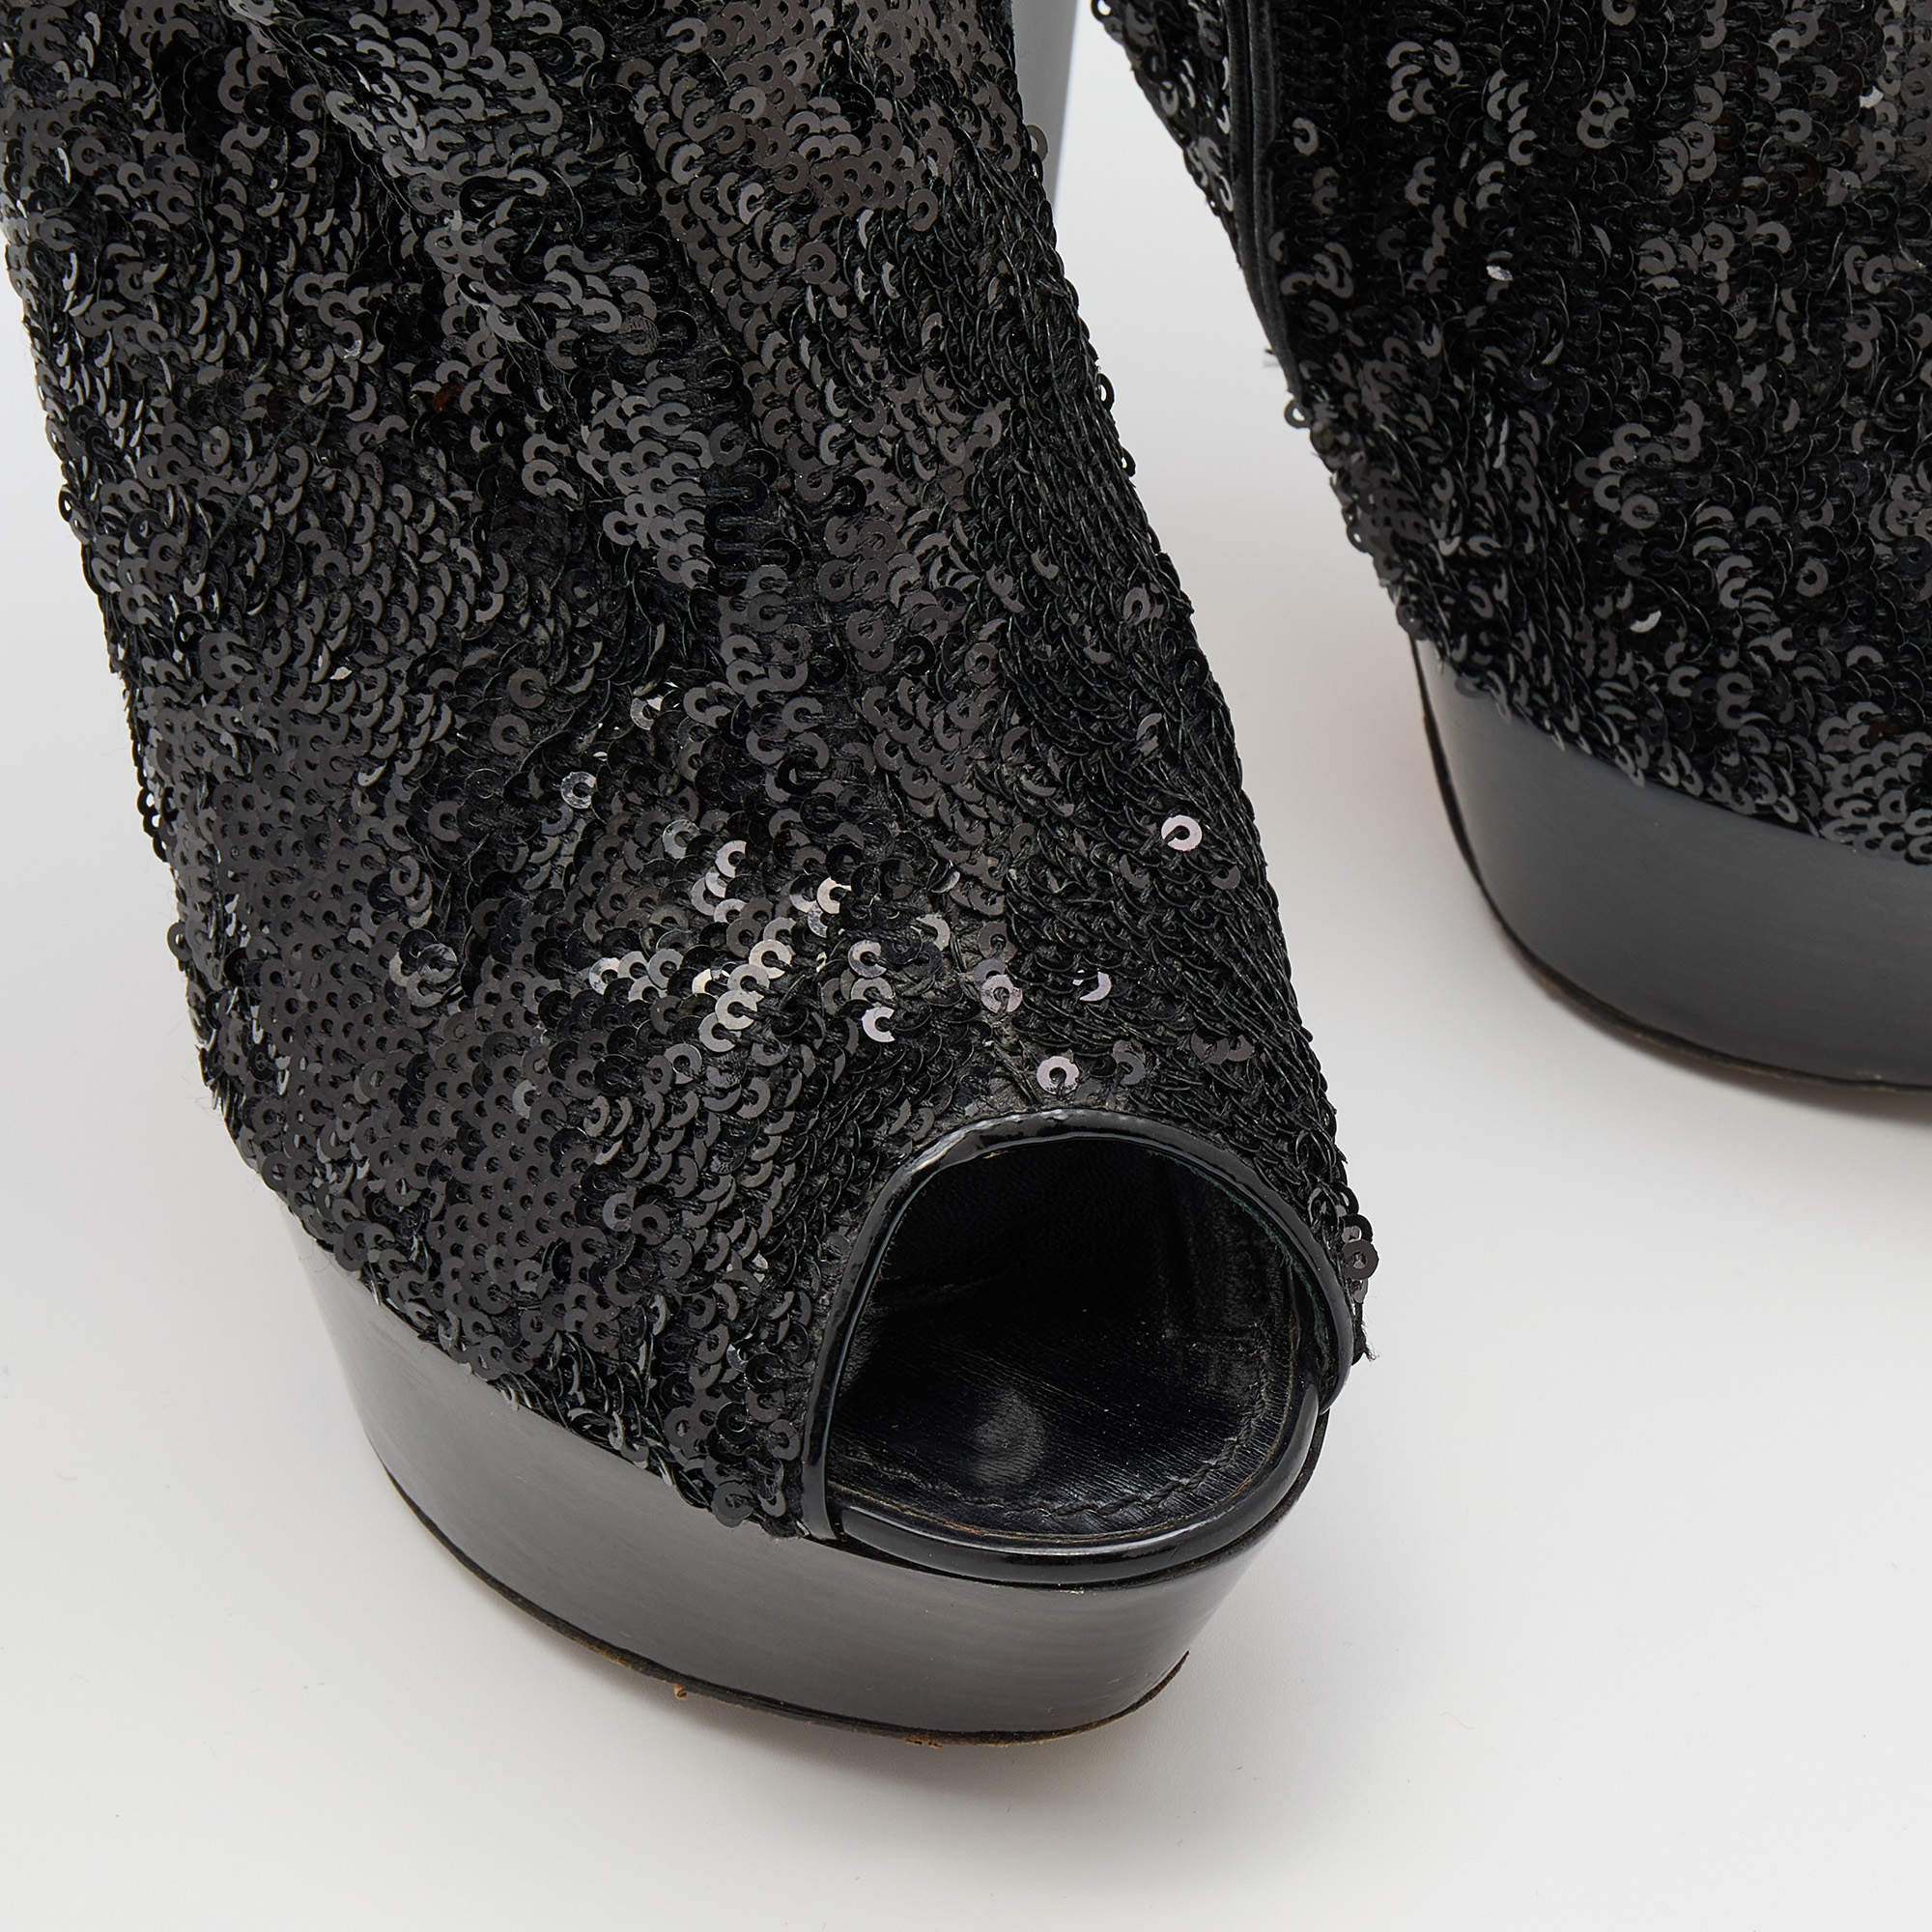 Louis Vuitton Black Sequins and Leather Mid Calf Platform Boots